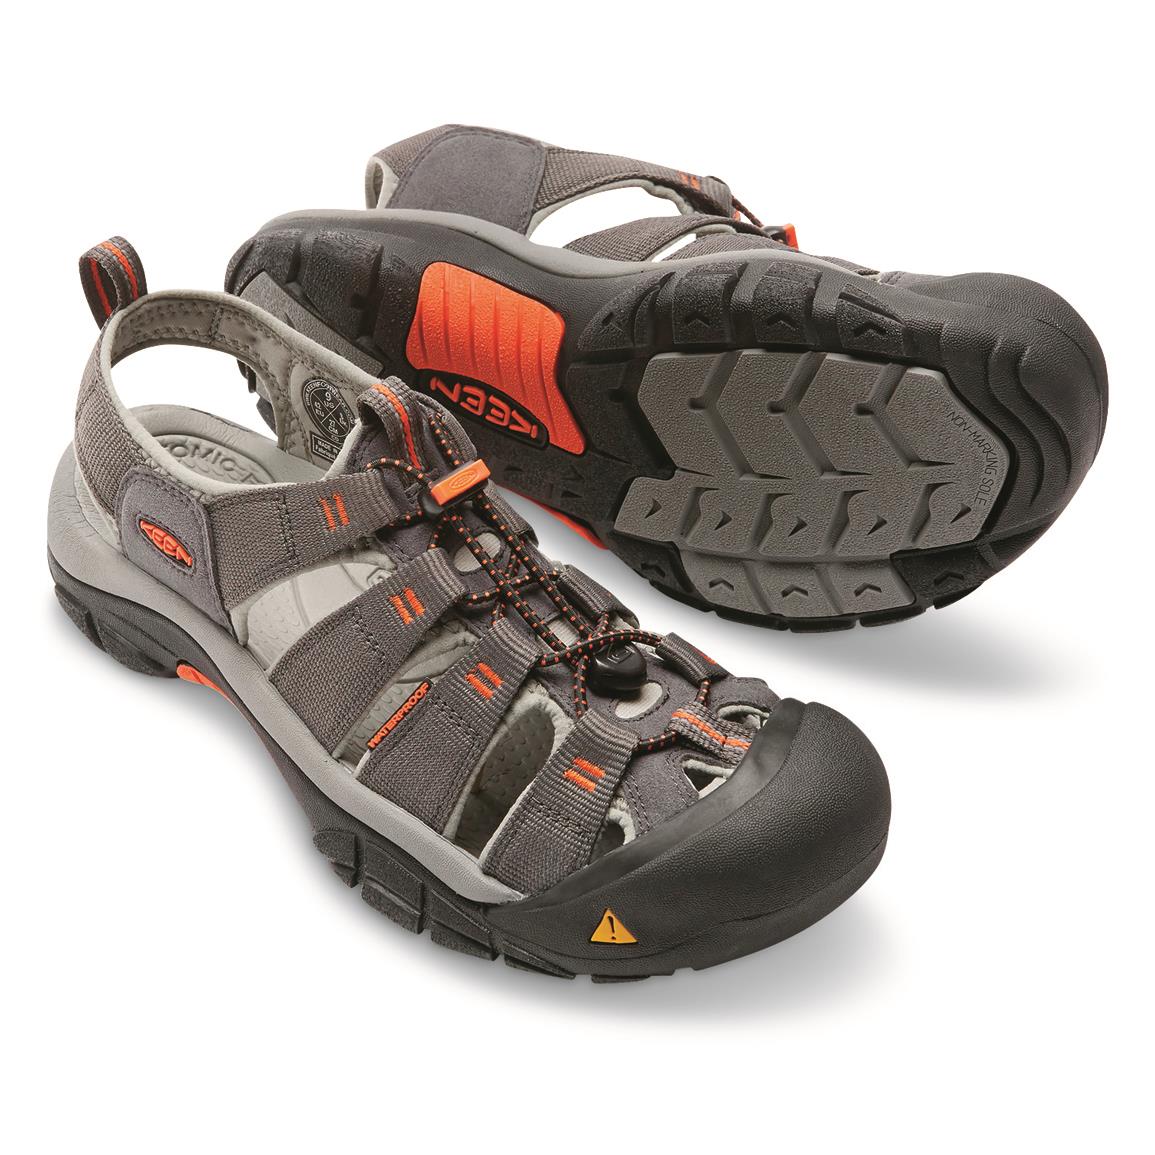 KEEN Men's Newport H2 Sandals - 703394, Sandals & Flip Flops at ...